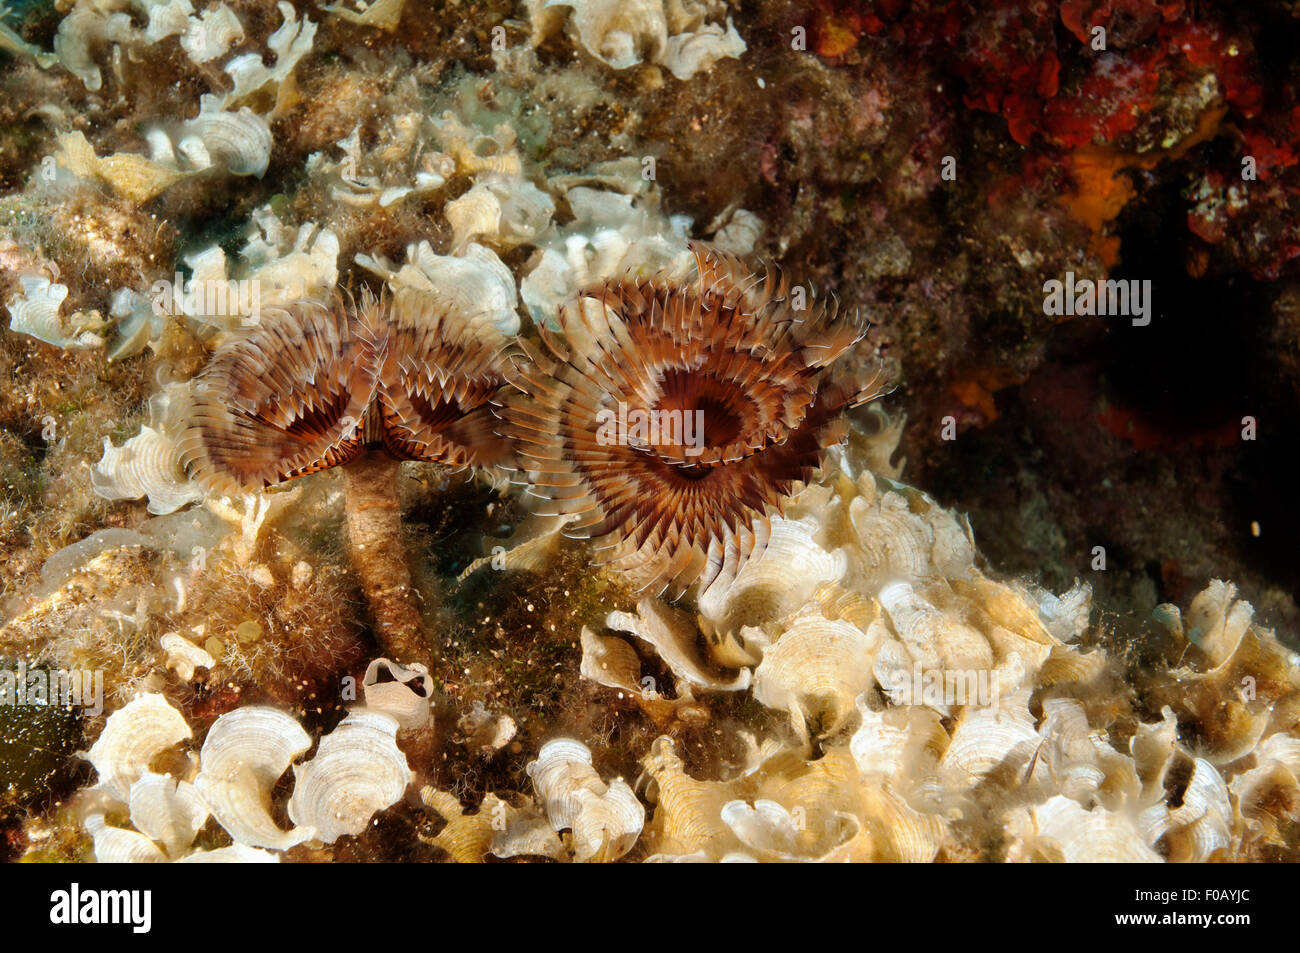 Tube worm, Sabella spallanzanii, Lipsi Island Greece Stock Photo